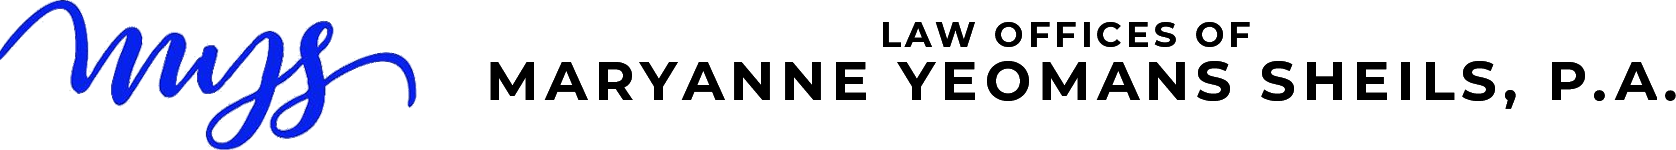 maryanne logo